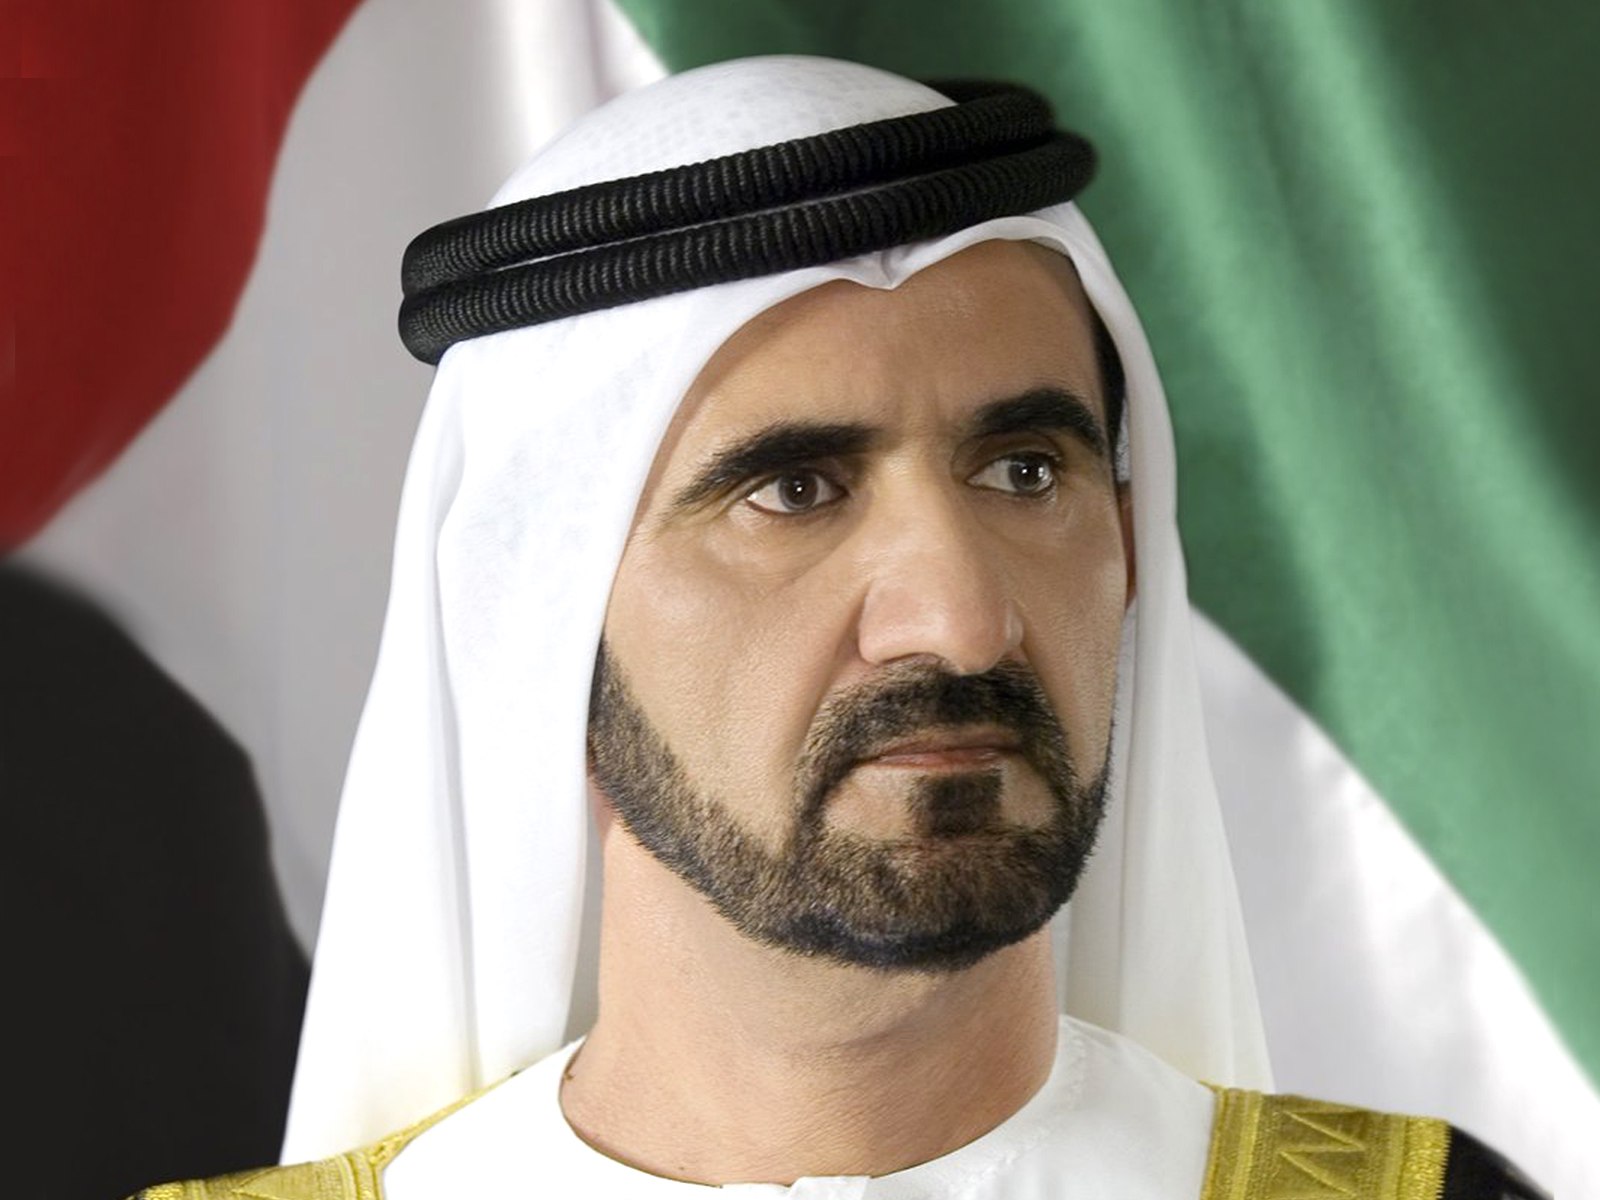 Sheikh Mohammed empowers vulnerable across MENA